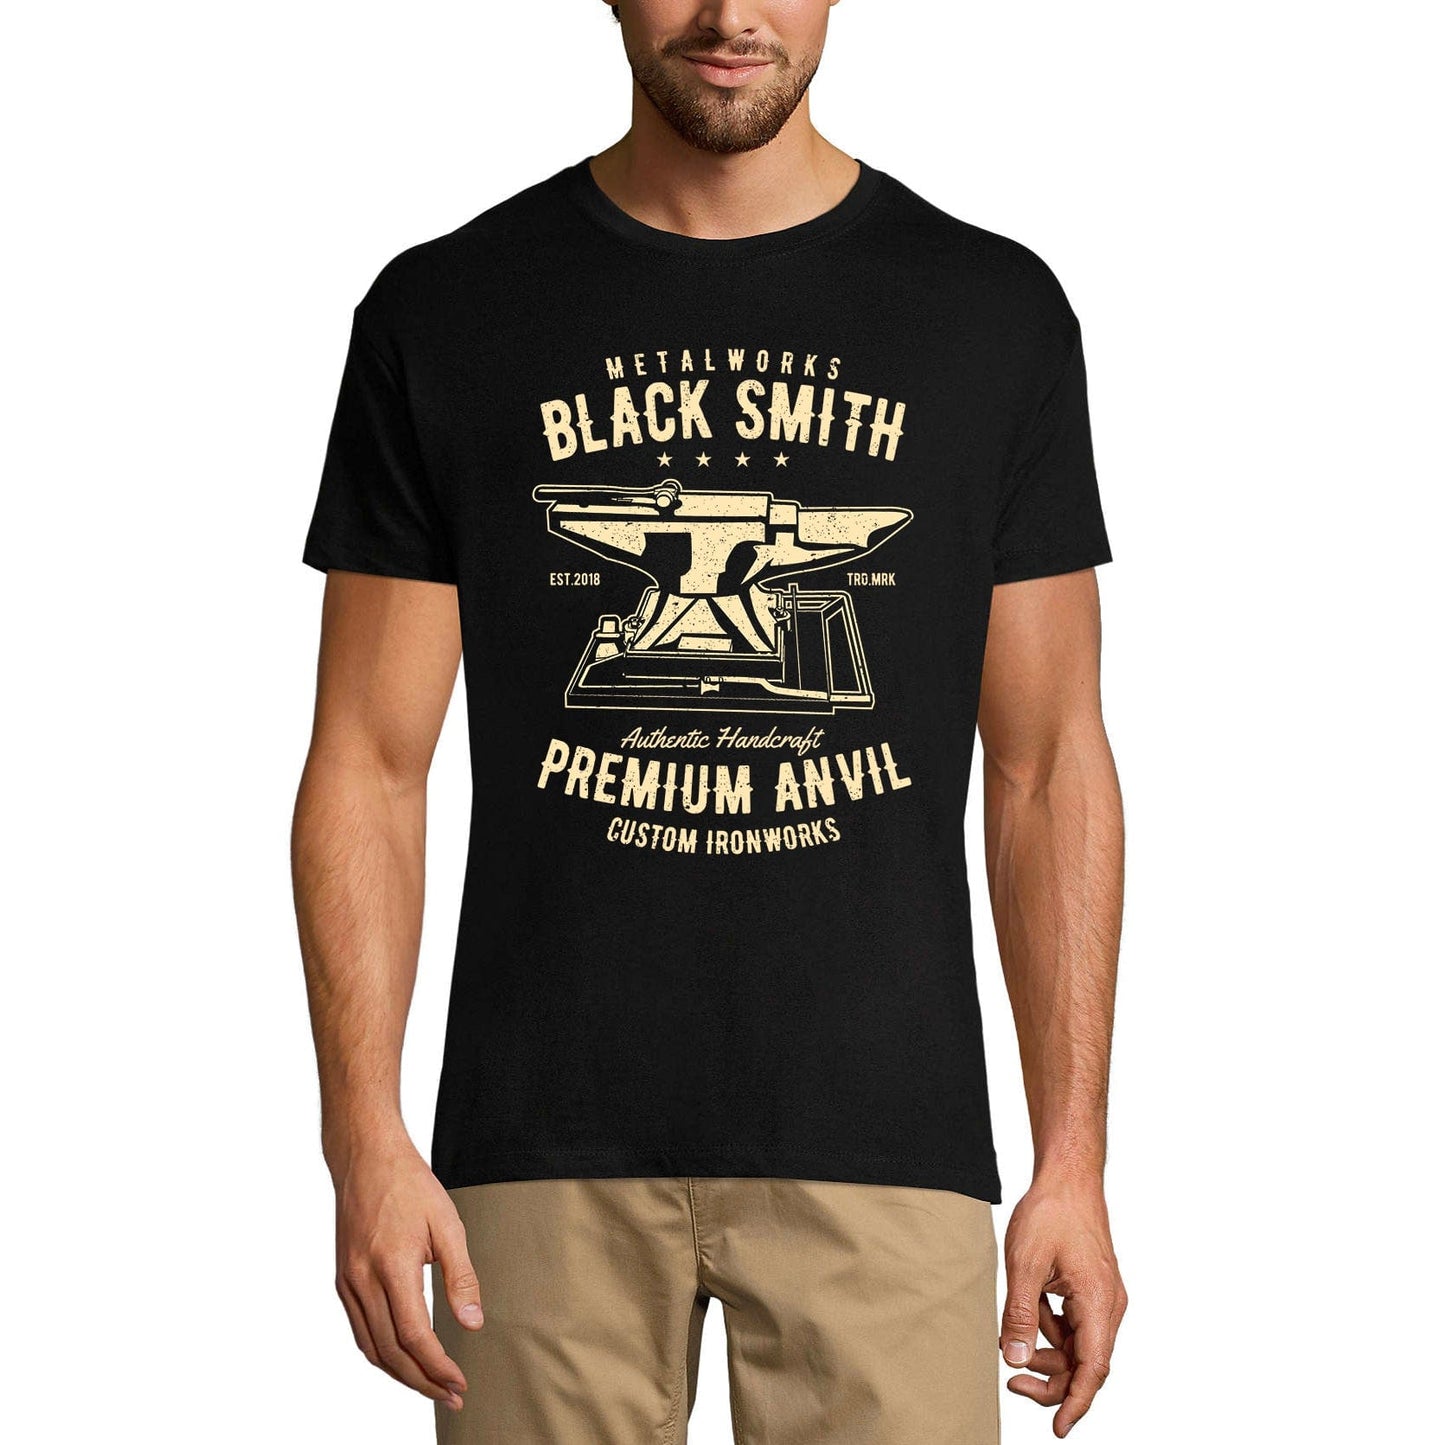 ULTRABASIC Herren T-Shirt Metalworks Black Smith – Custom Ironworks Blacksmith T-Shirt